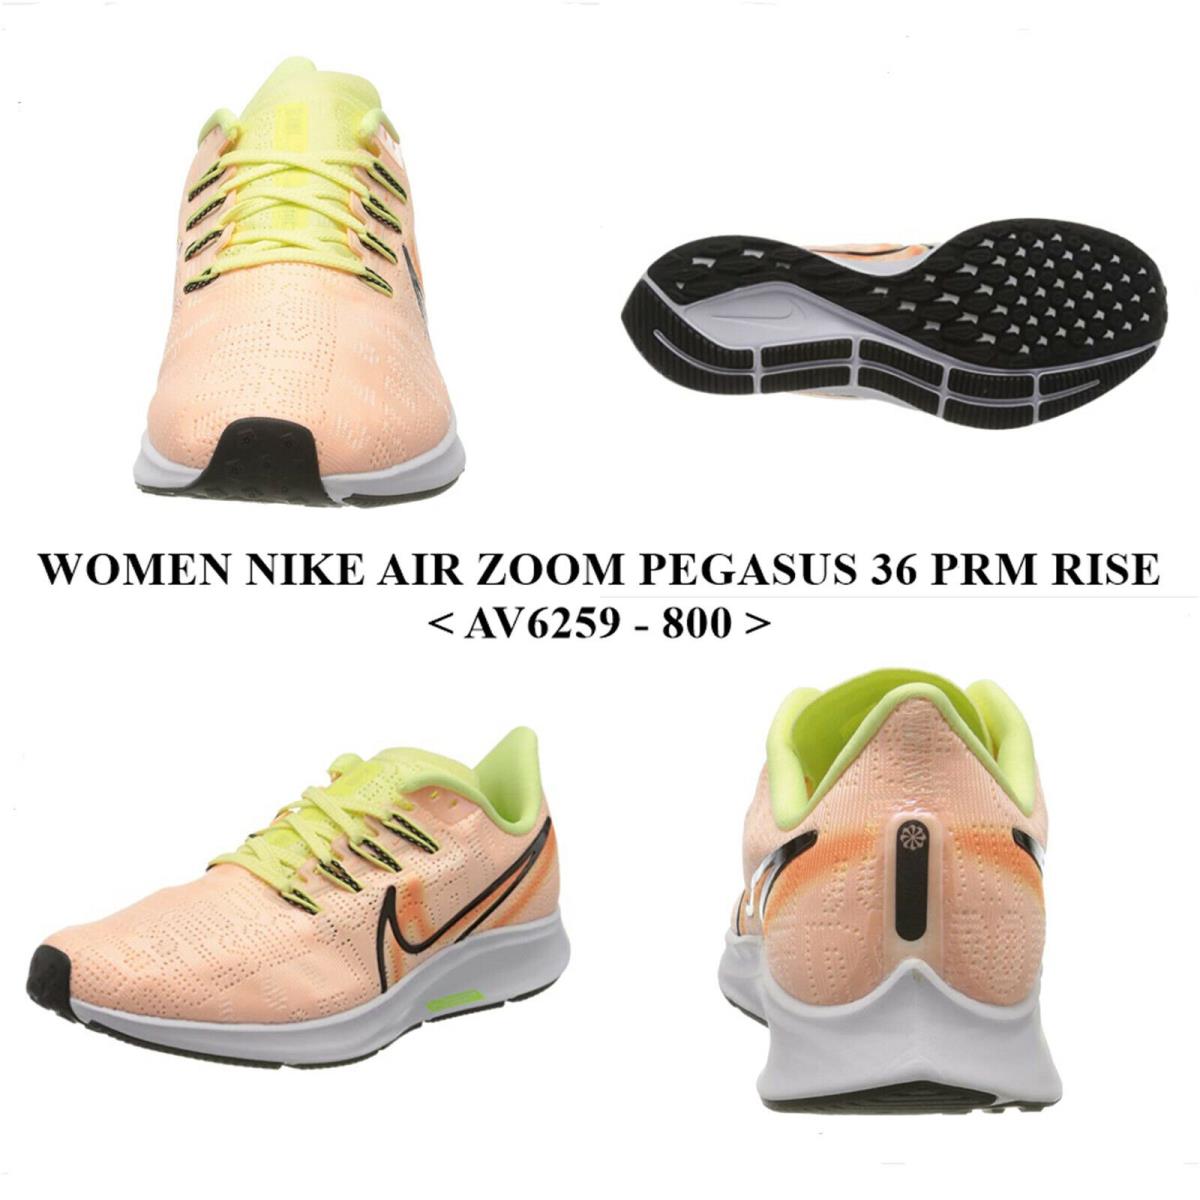 Women`s Nike Air Zoom Pegasus 36 Prm Rise <AV6259 - 800> Running/casual Shoe`s - CRIMSON TINT/BLACK